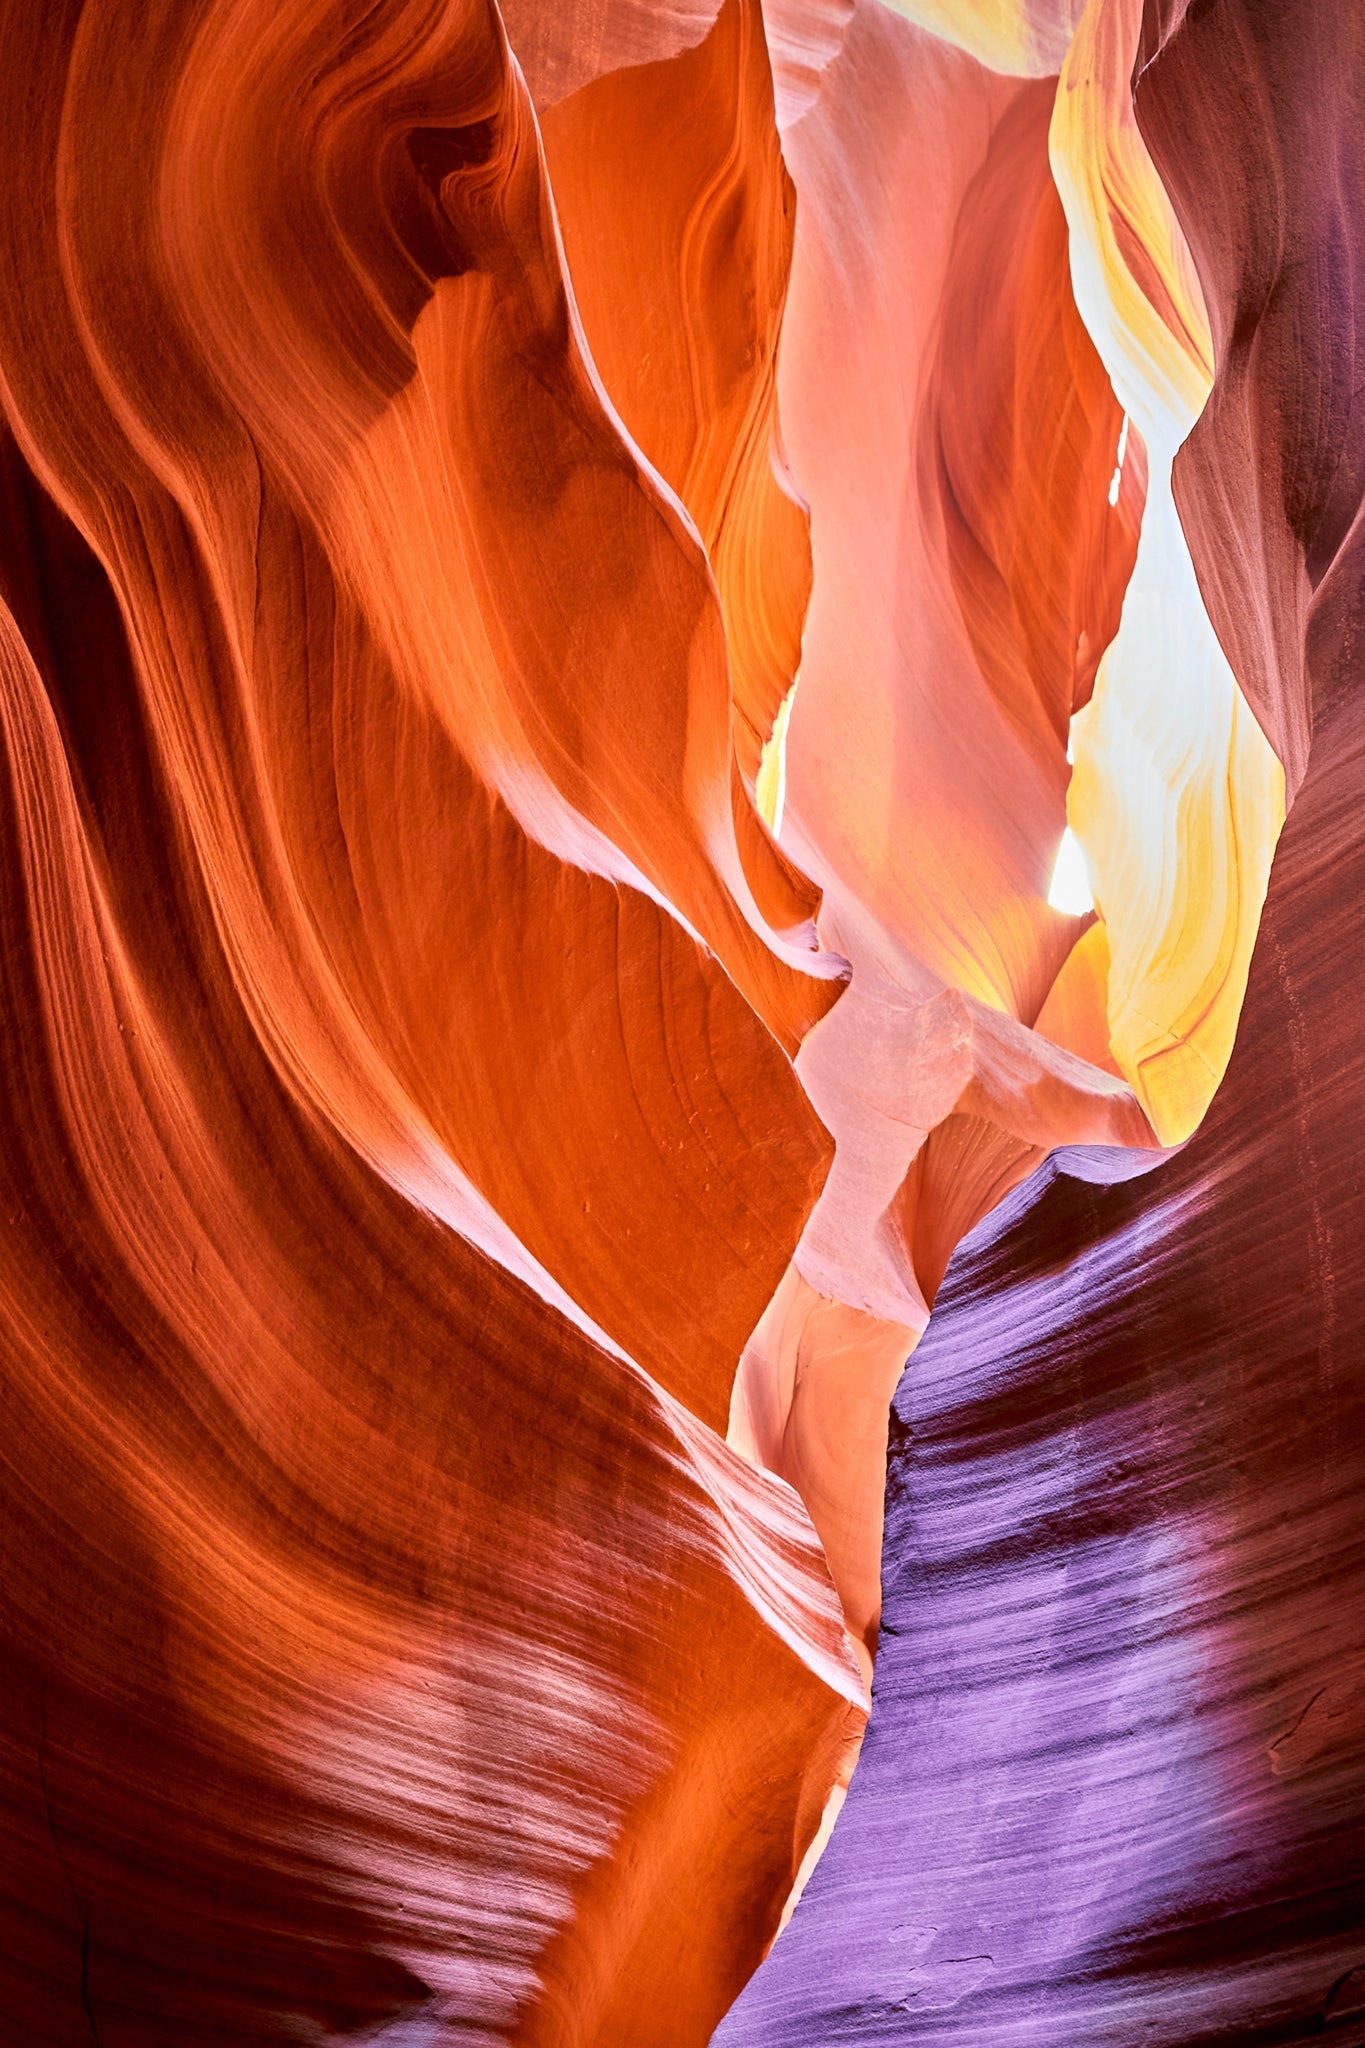 Ablaze - Antelope Canyon, Arizona USA